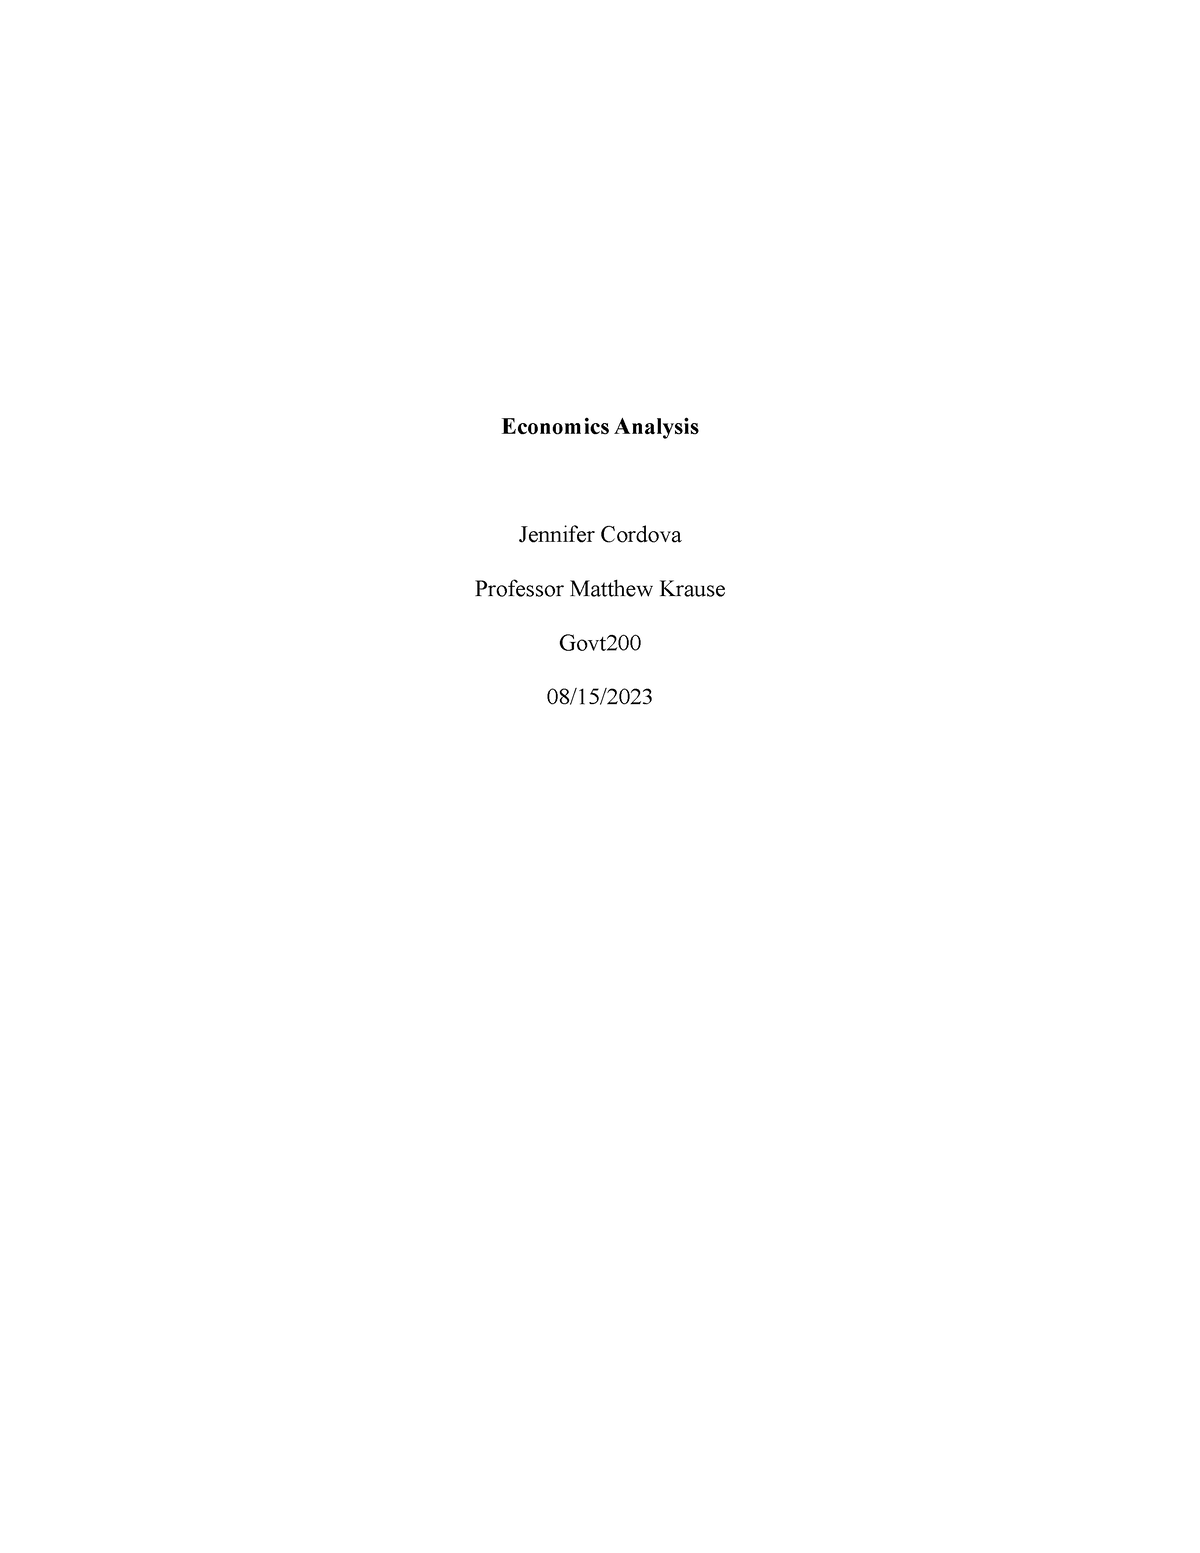 Economics Analysis - ethics homework - Economics Analysis Jennifer ...